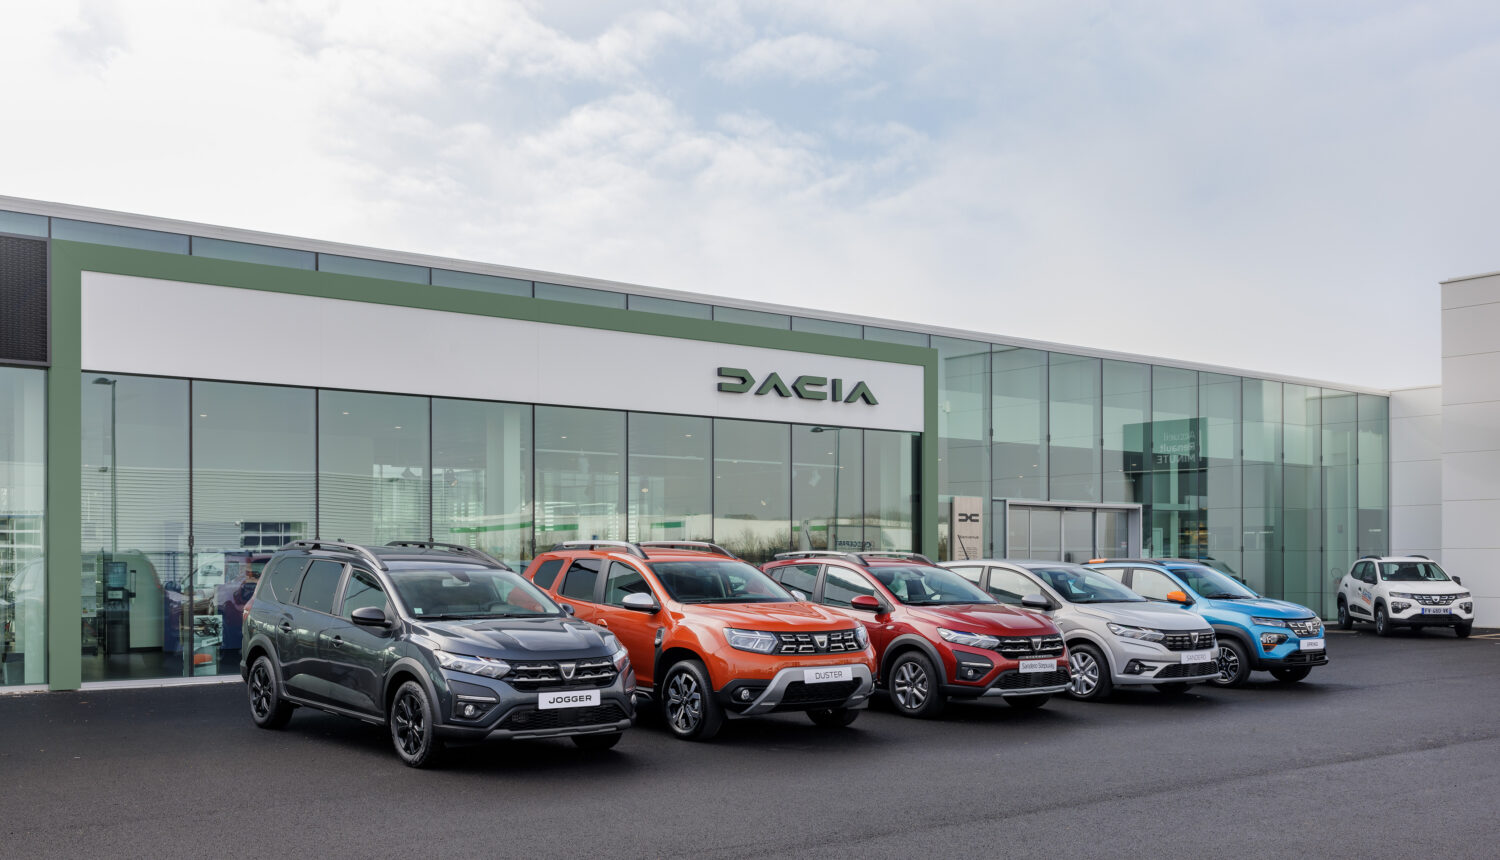 2022 - New visual identity of Dacia network